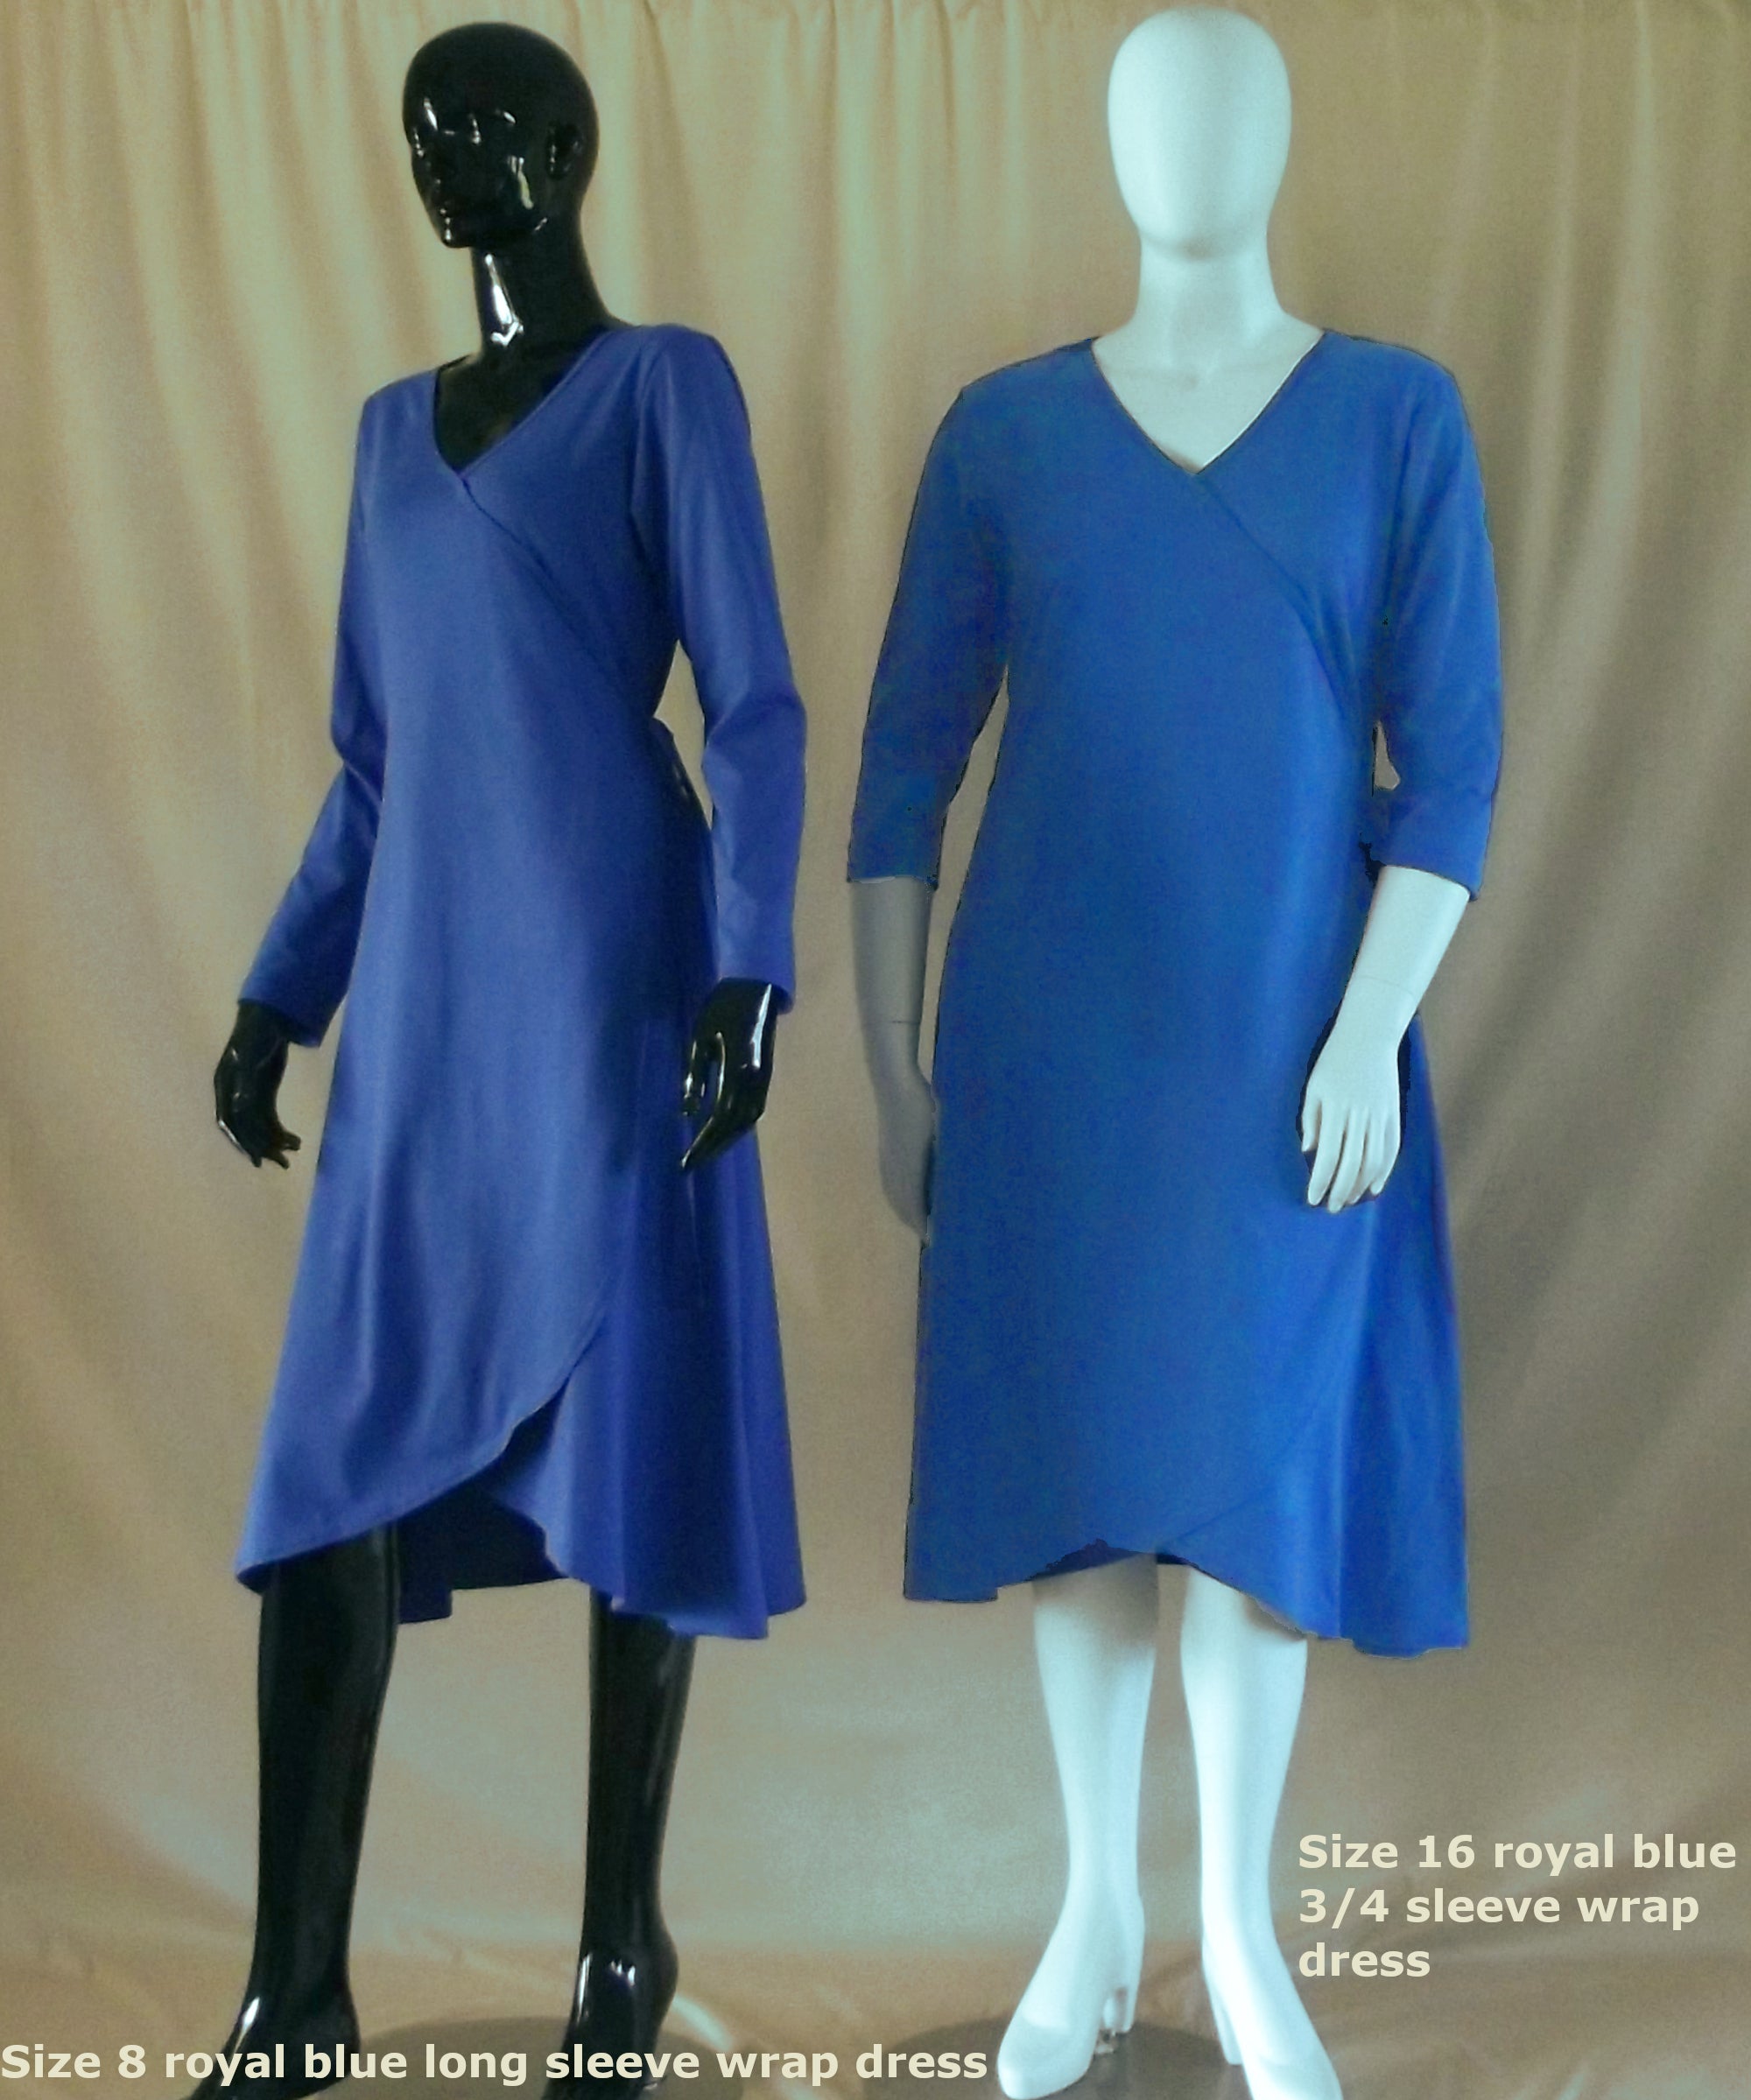 1 plus size royal blue Australian made long sleeve cotton wrap dress standing beside 1 royal blue 3/4 sleeve cotton wrap dress